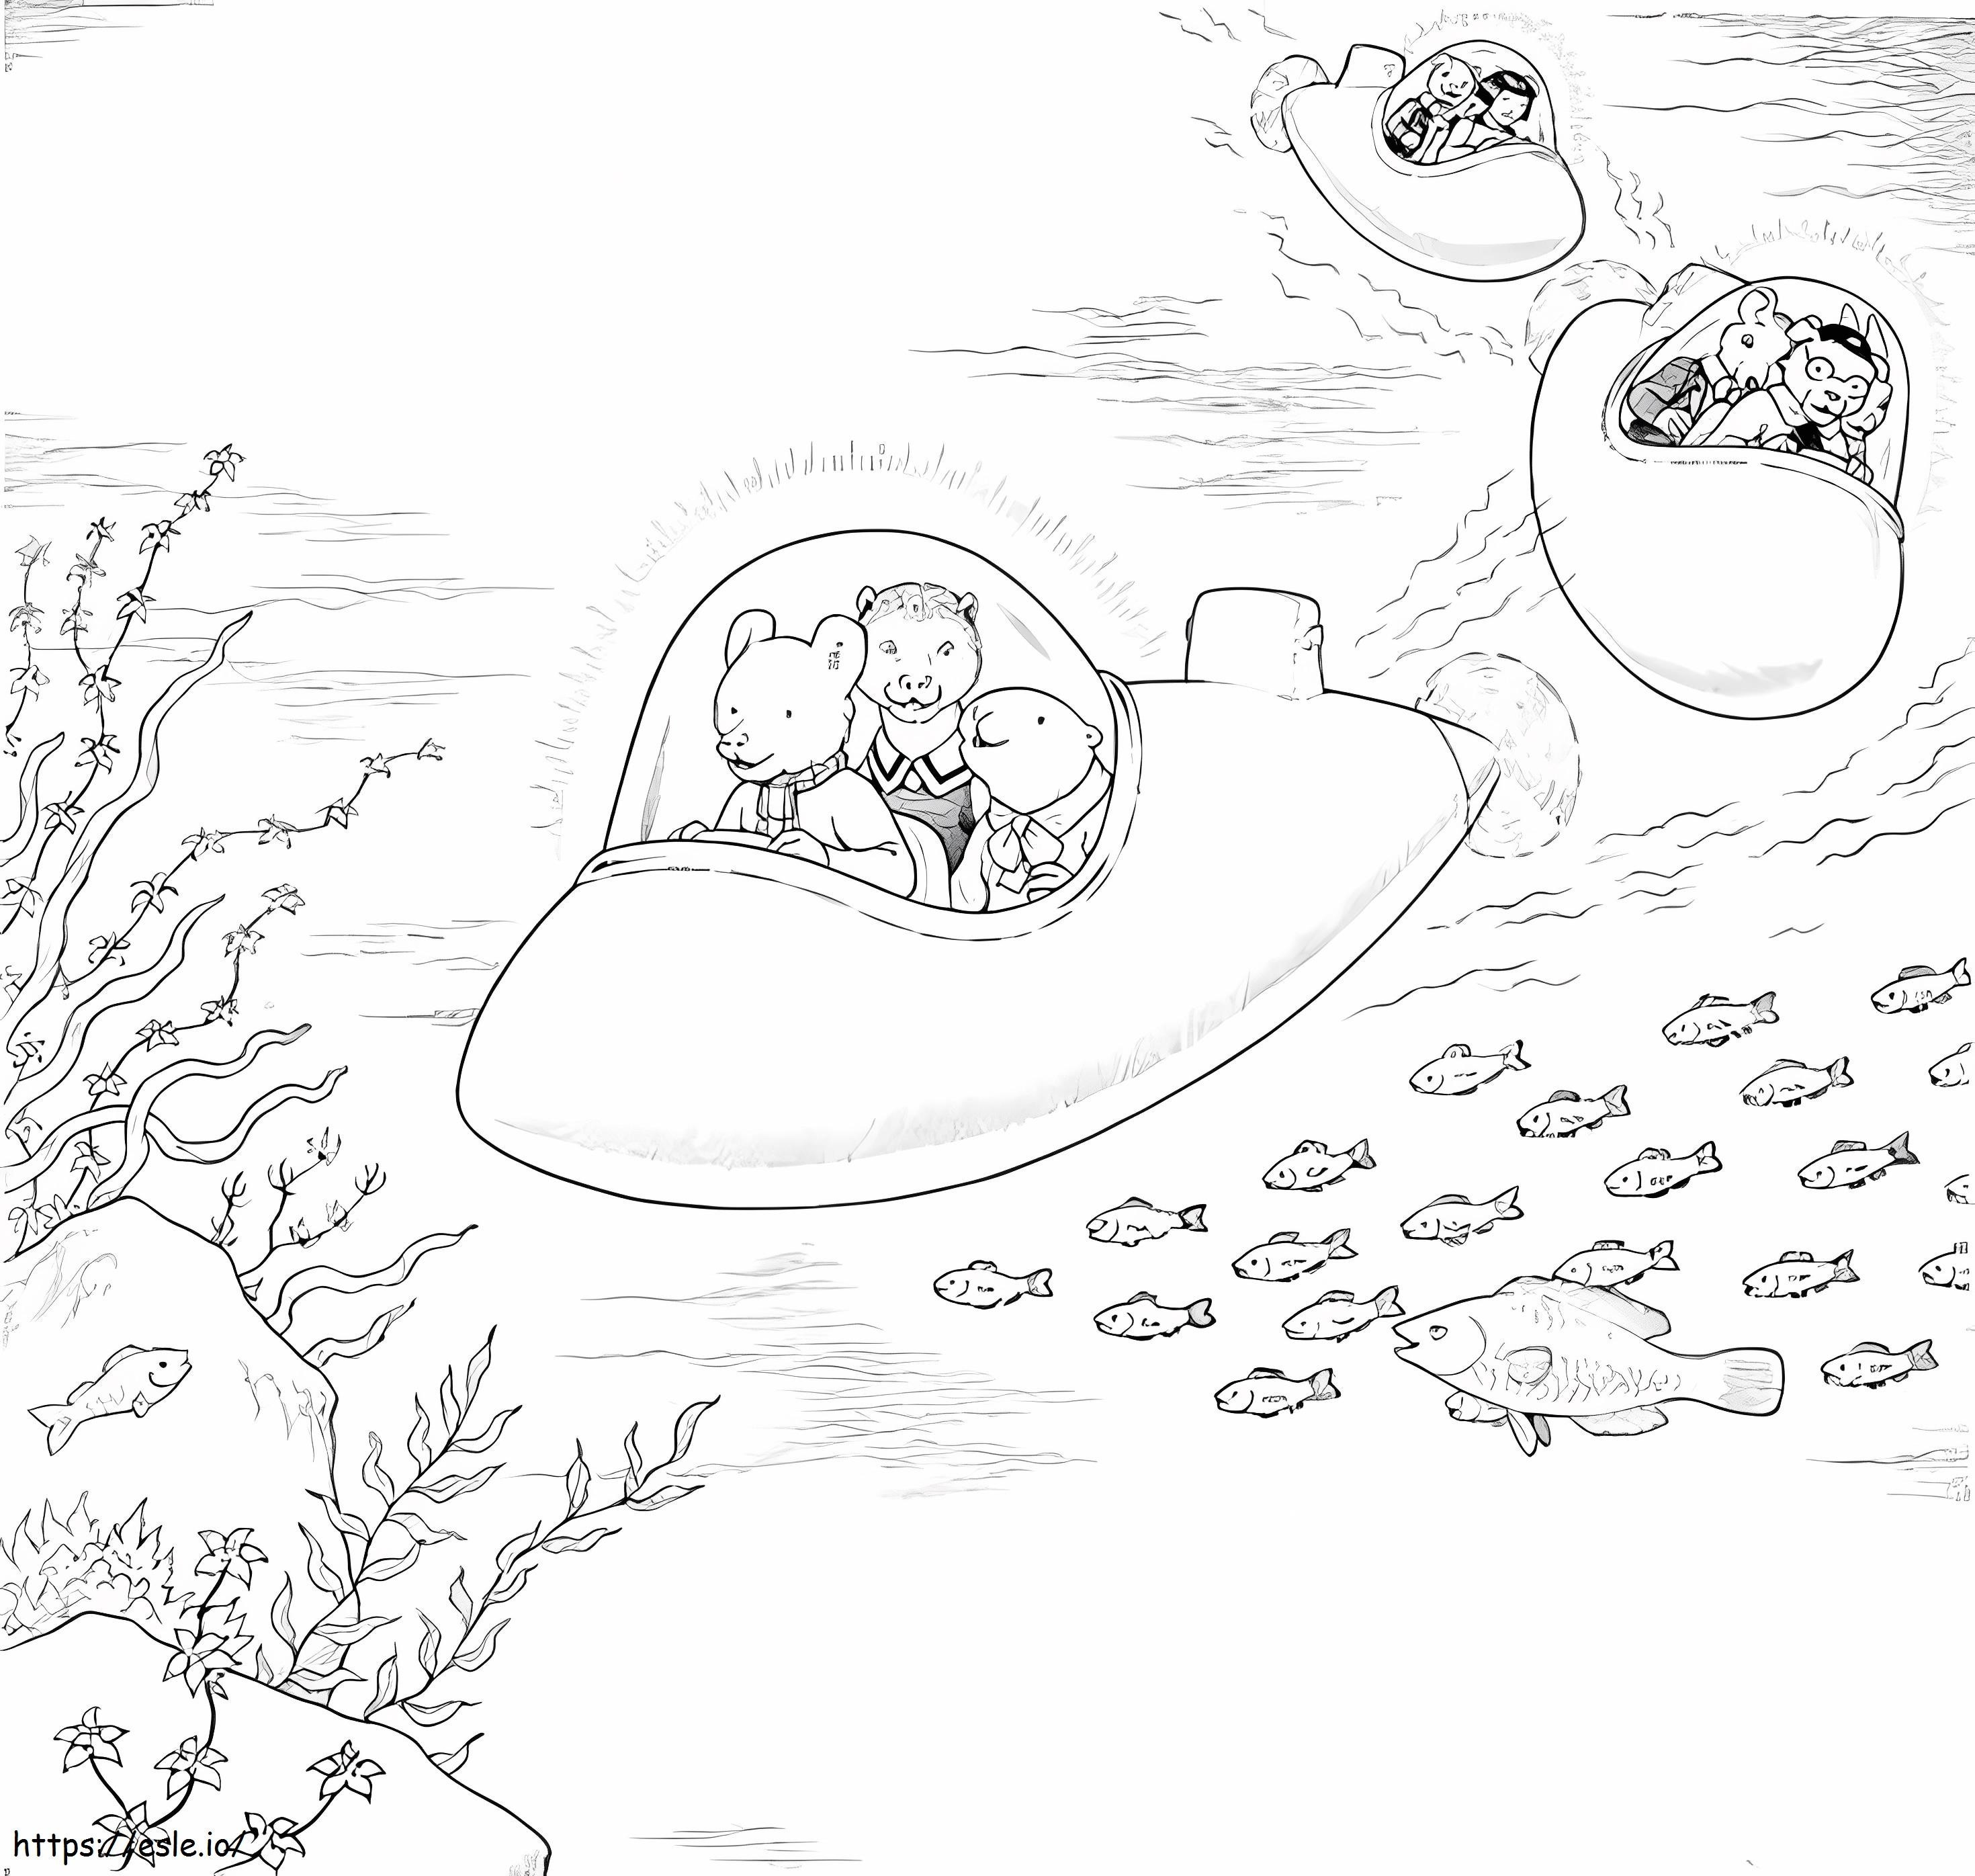 Rupert Bear Rides A Submarine coloring page